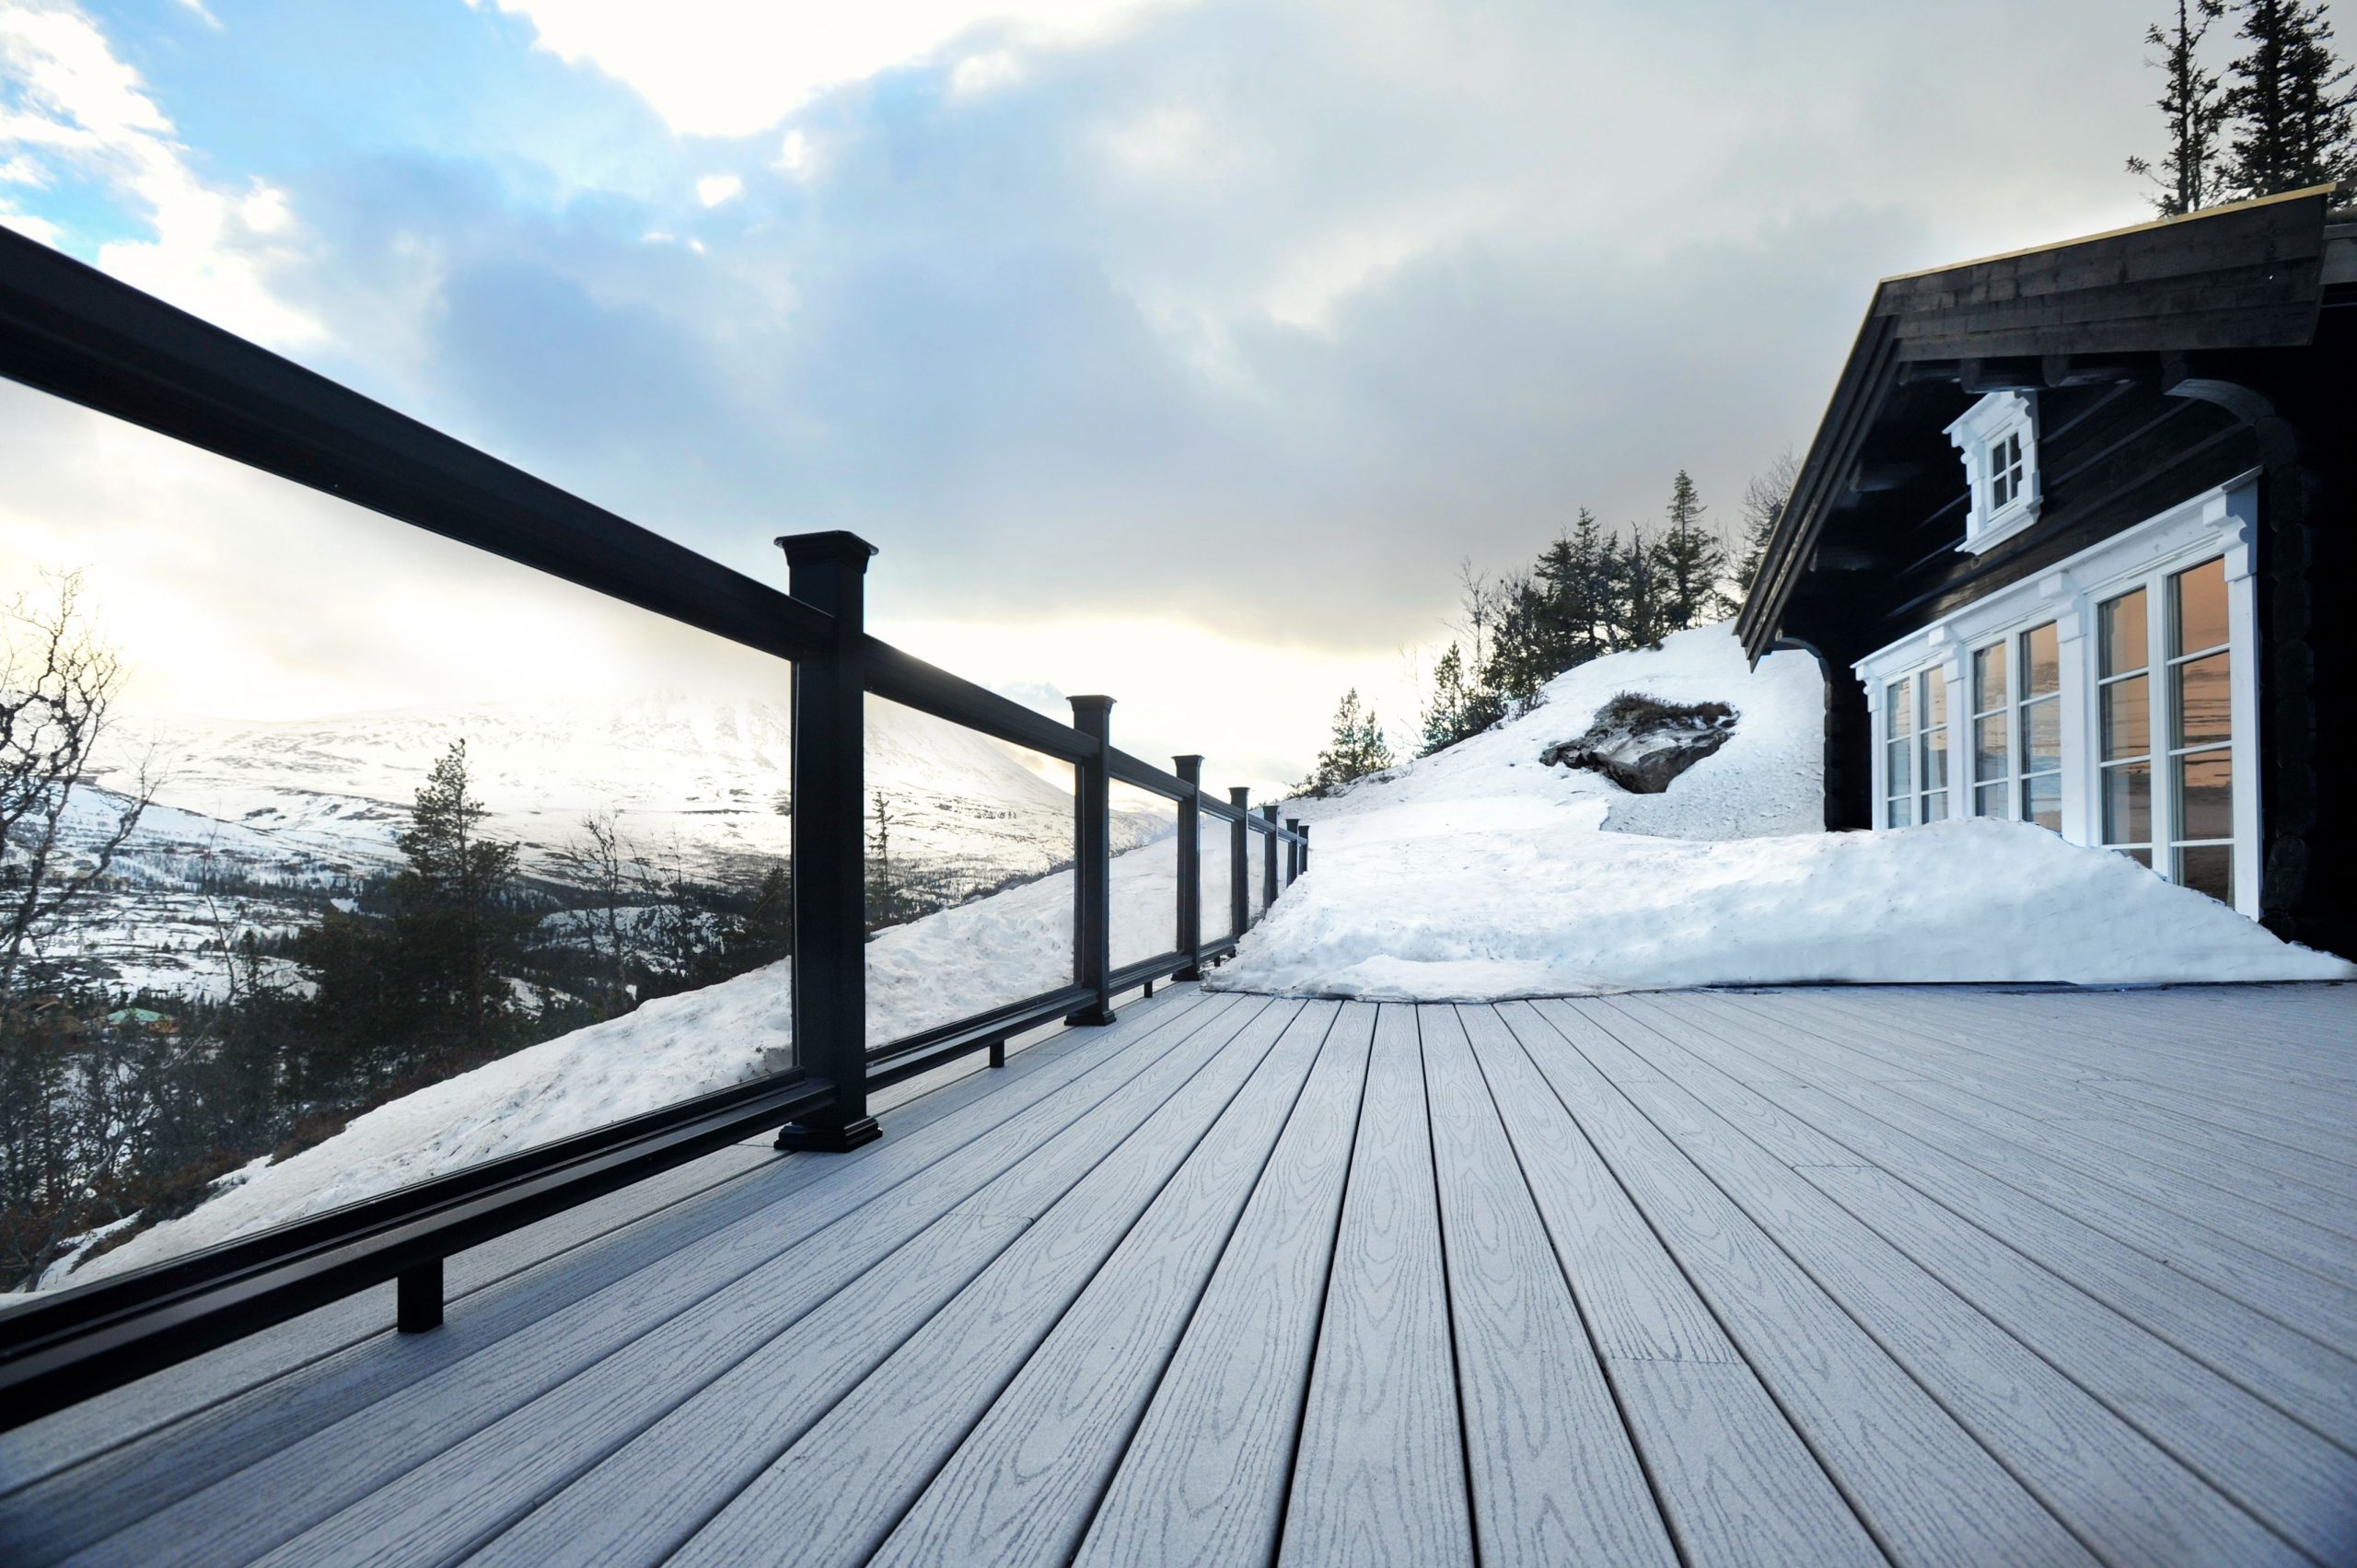 Remove Snow from Your Deck/Photo Fiberon